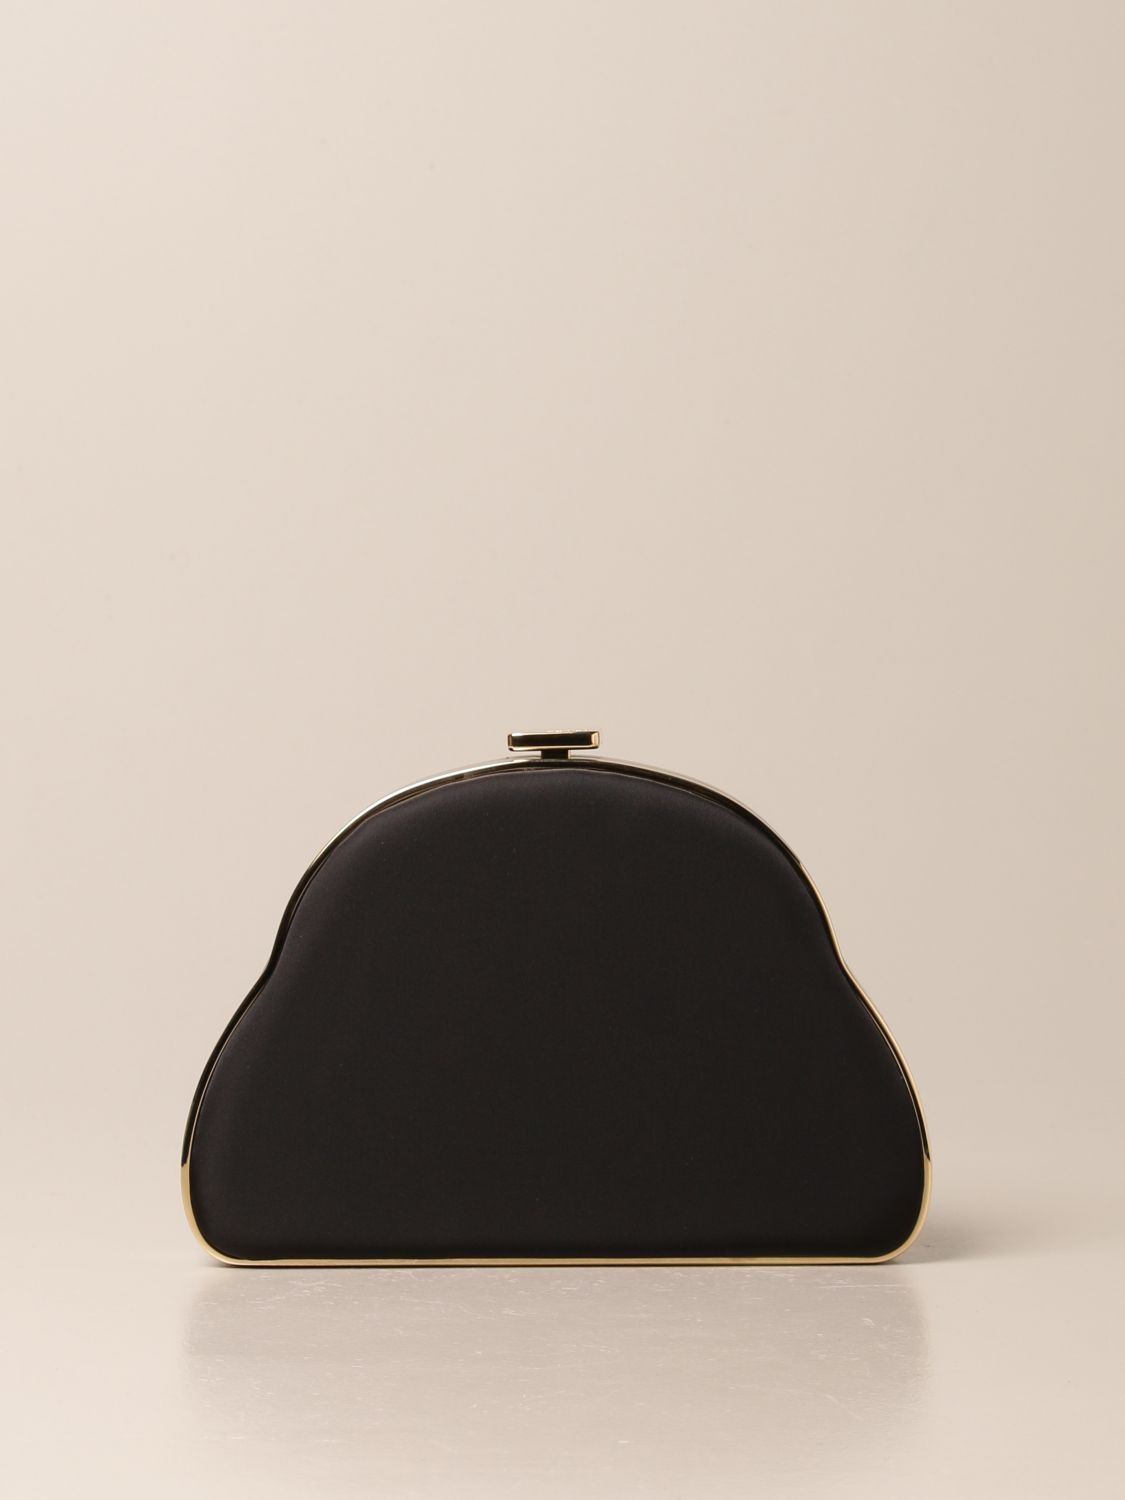 Prada Nylon Clutch - Black Clutches, Handbags - PRA735411